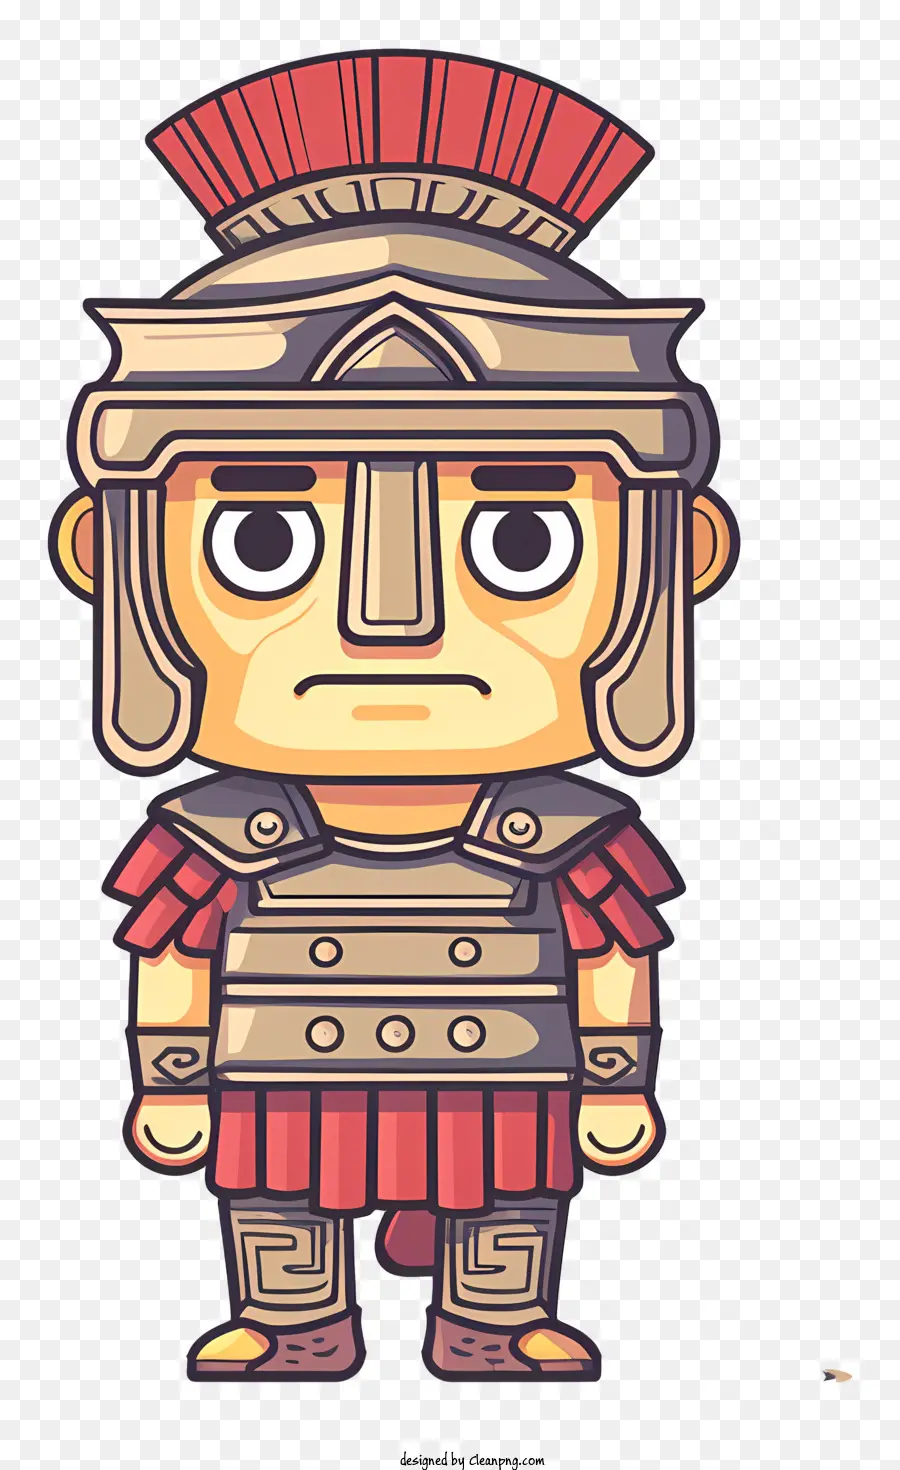 Ancient Roma Soldier Roman Warrior Cartoon Repisation Armature Helmet - Cartoon Roman Warrior con espressione arrabbiata che parla